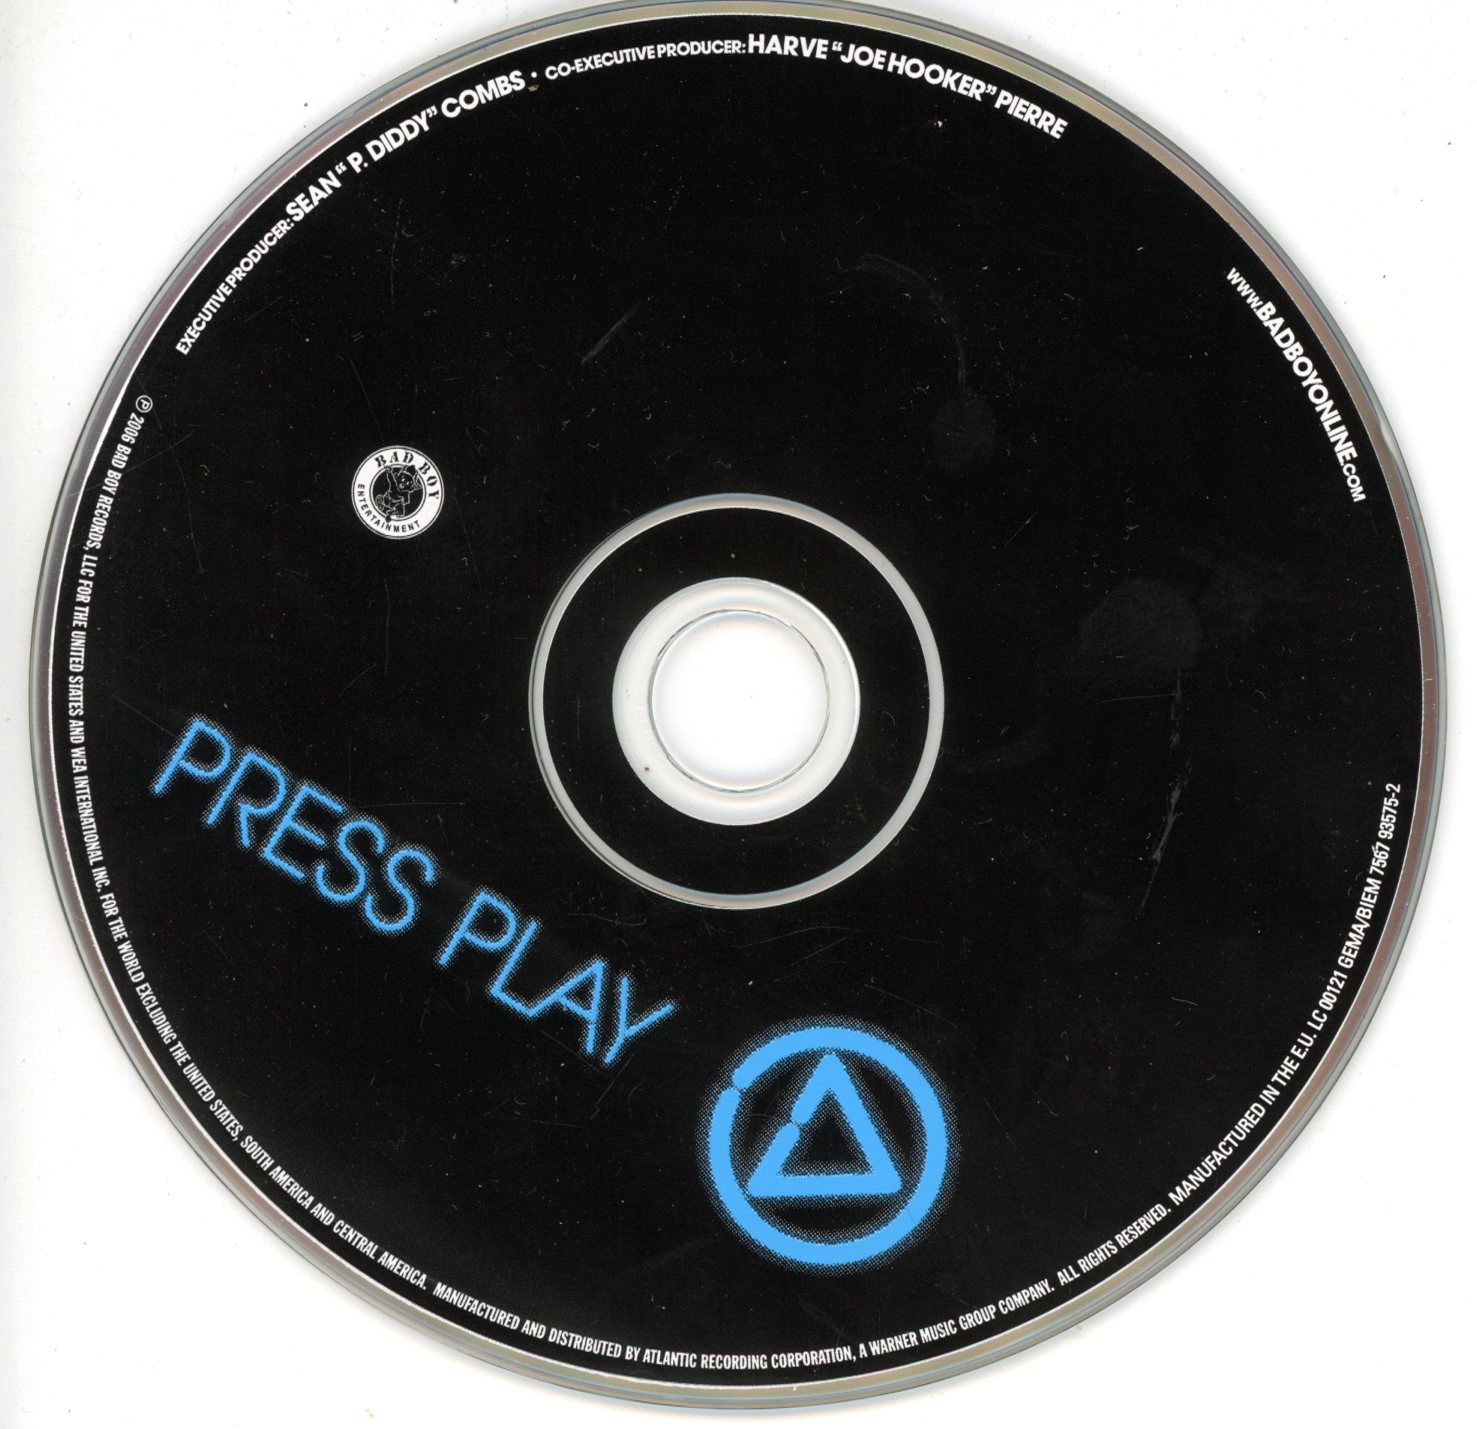 Diddy - Press Play (Clear Vinyl) LP DISCO DE VINIL - DooDoo - DooDoo